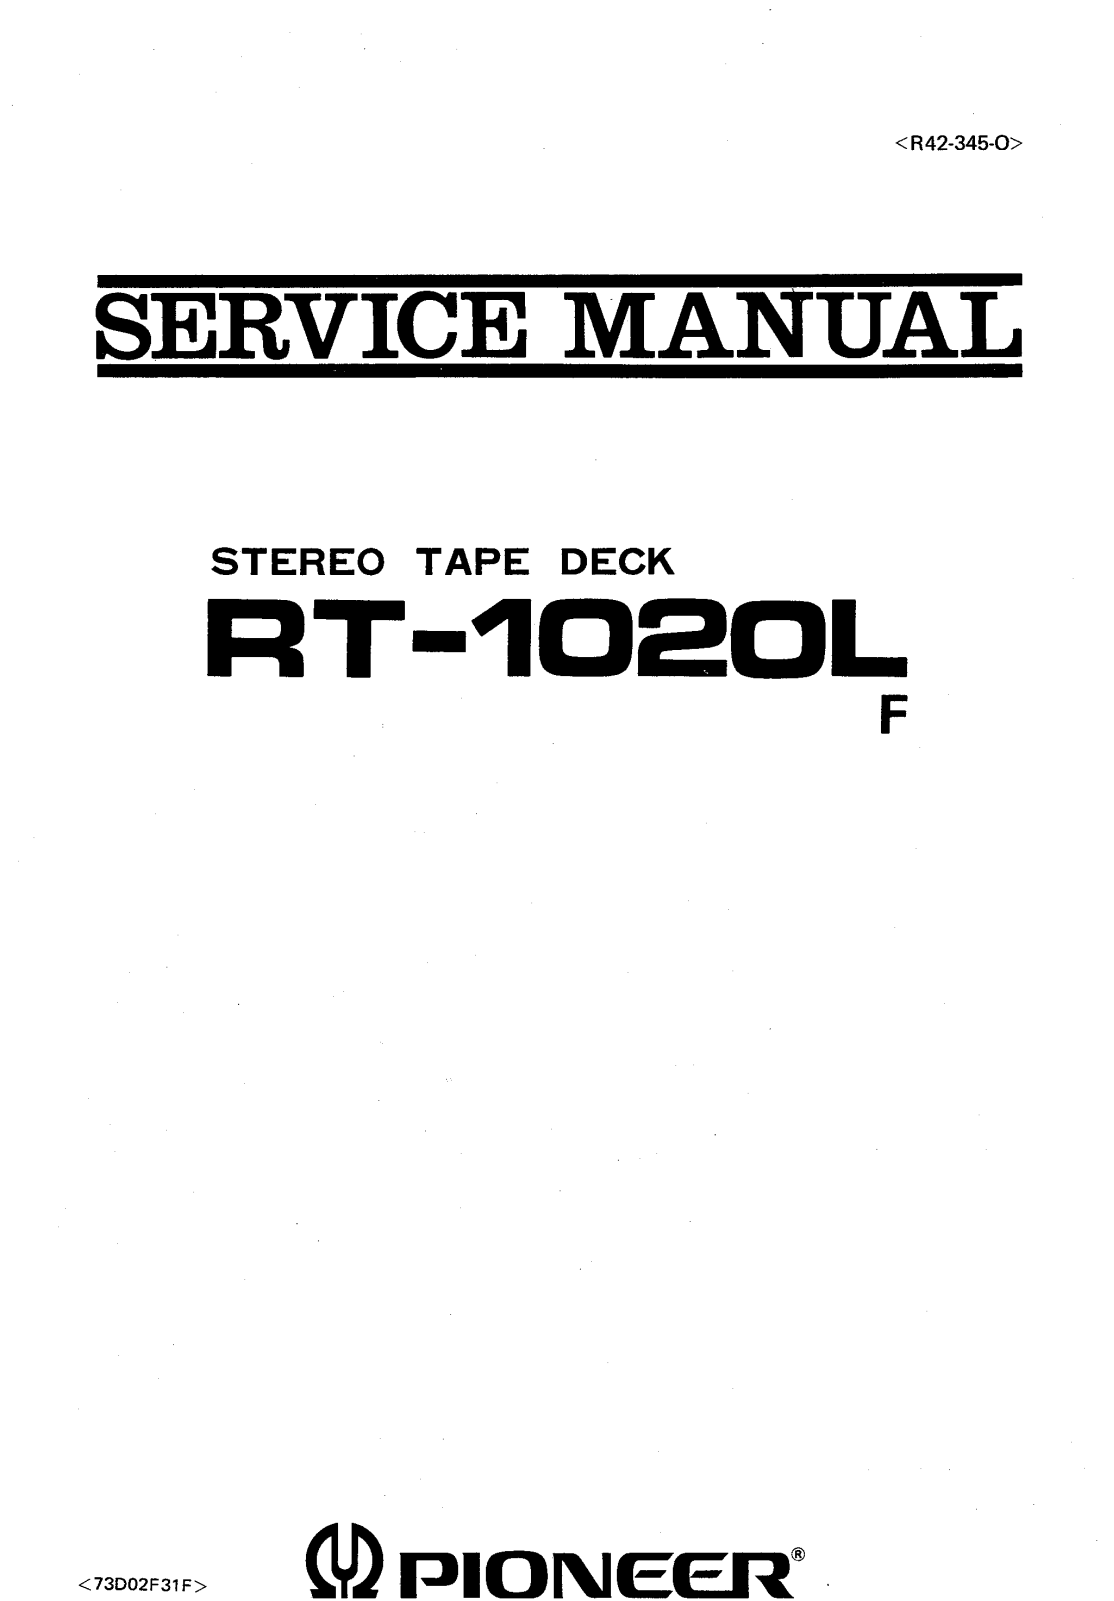 Pioneer RT-1020L Service Manual